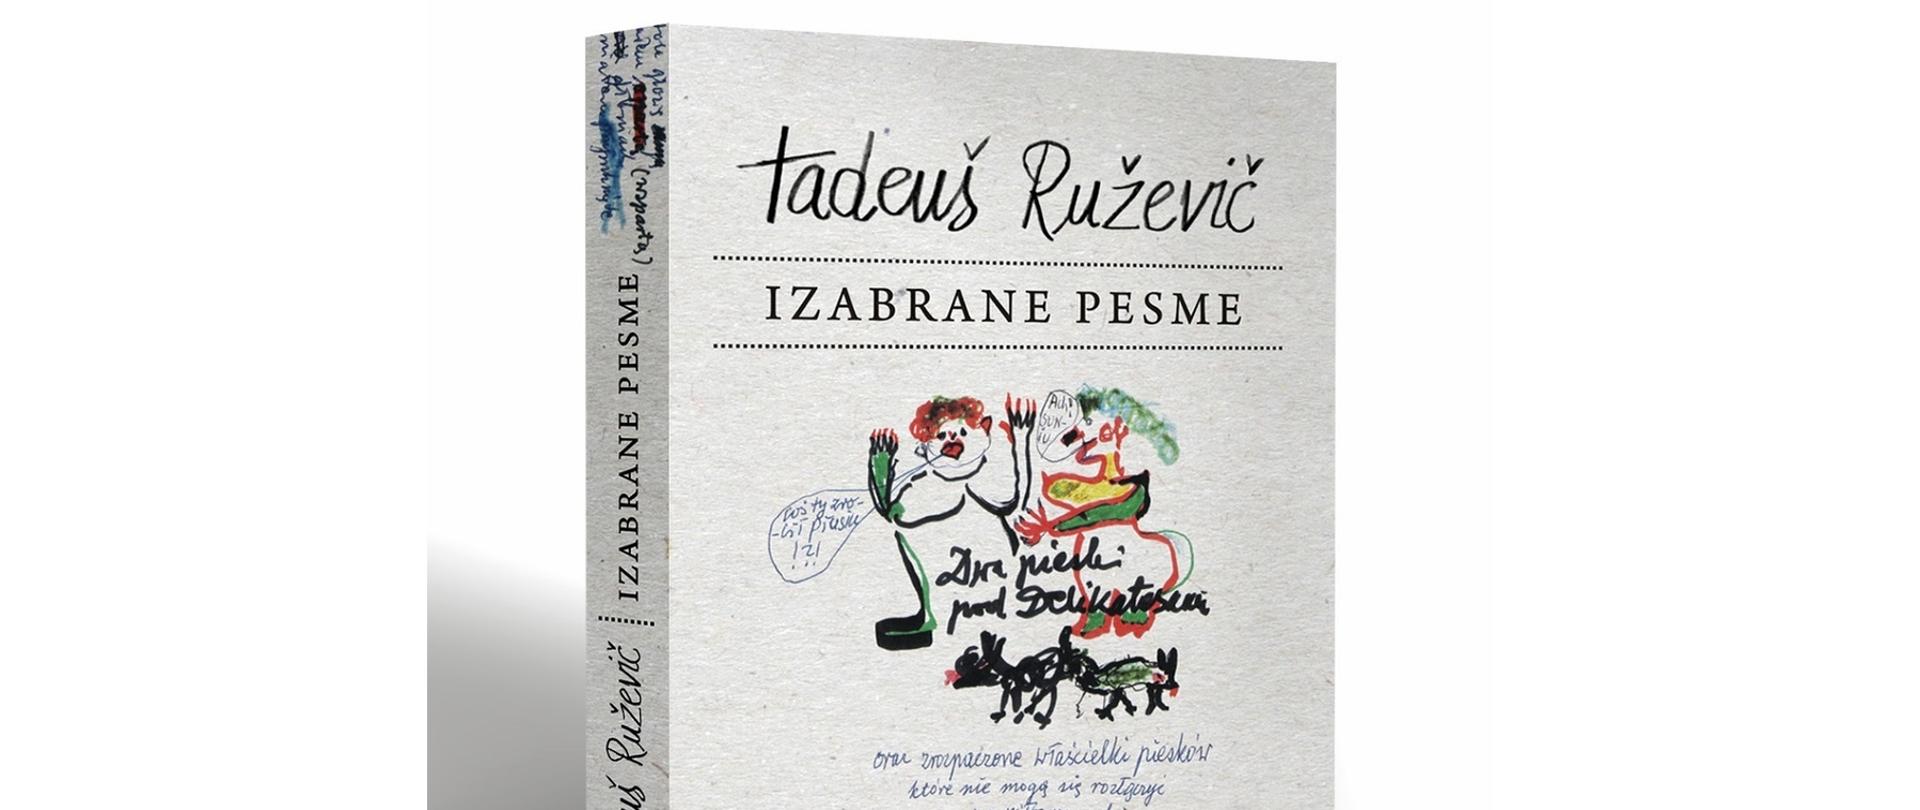 Tadeus-Ruzevic-IZABRANE-PESM